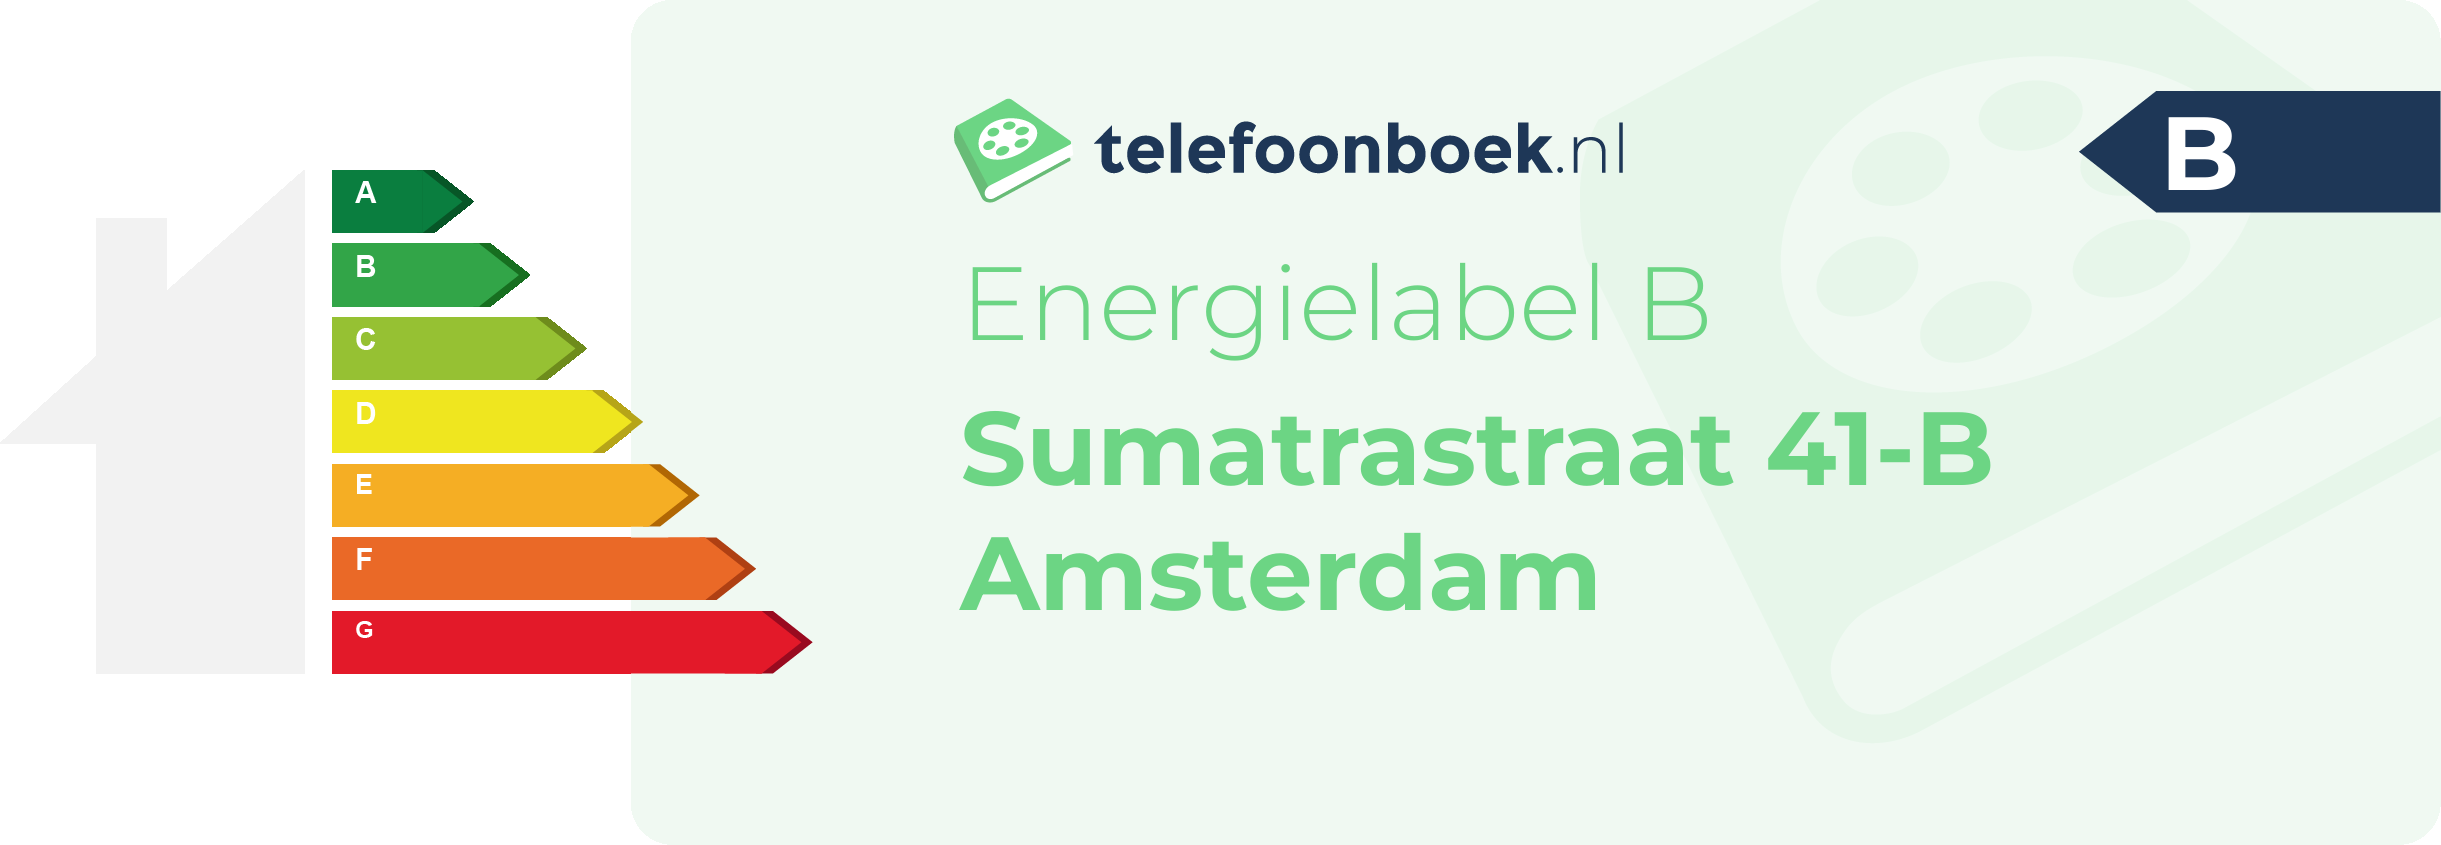 Energielabel Sumatrastraat 41-B Amsterdam